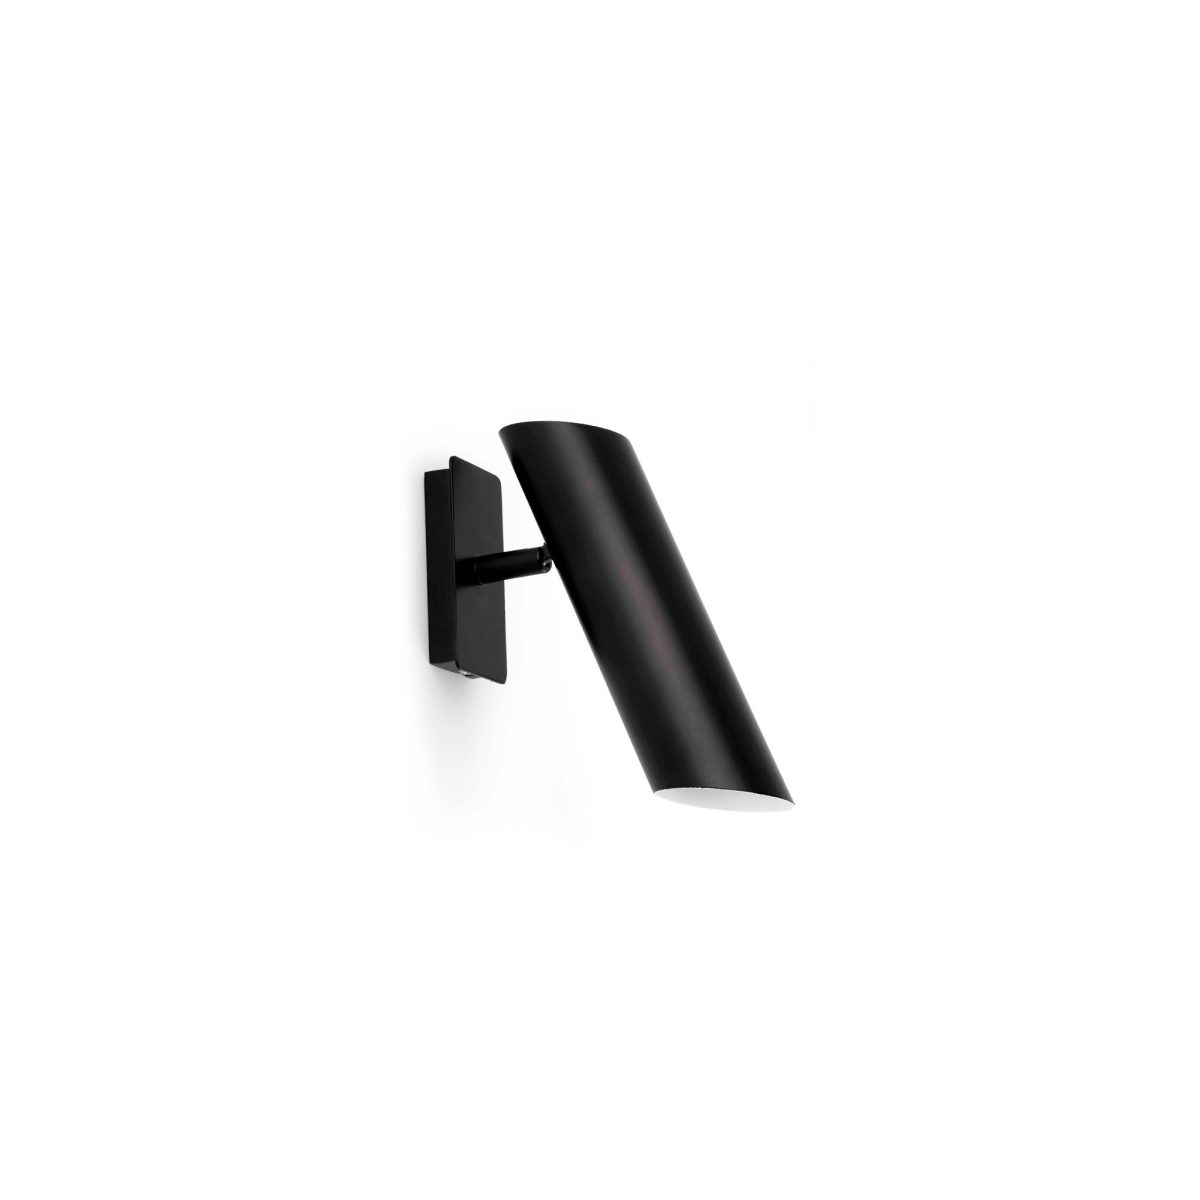 LINK Aplique de Faro. Medidas: L 56 x A 220 x F 180 mm. Color: Negro